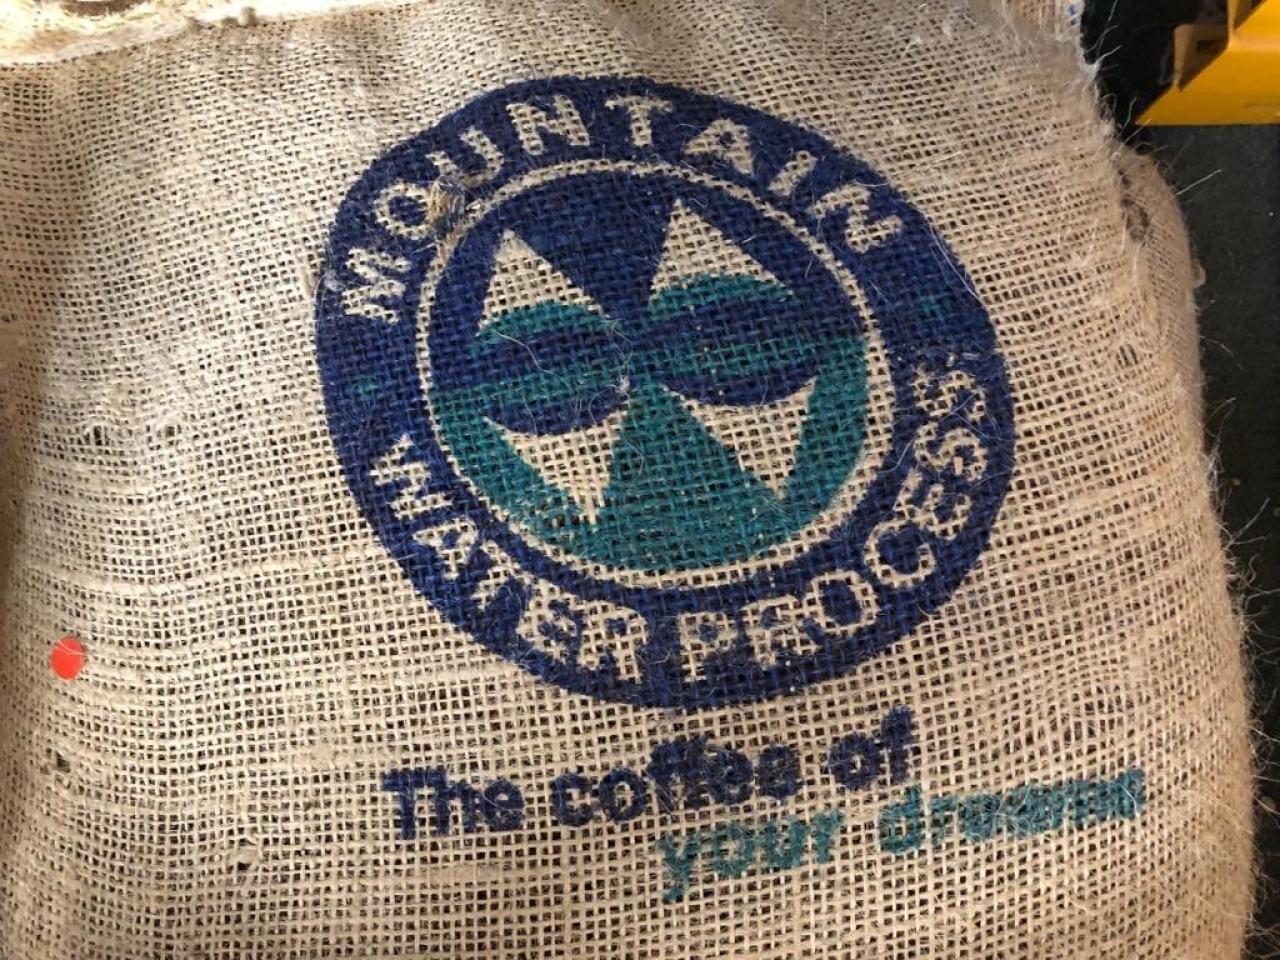 Koffiezak met Swiss water logo